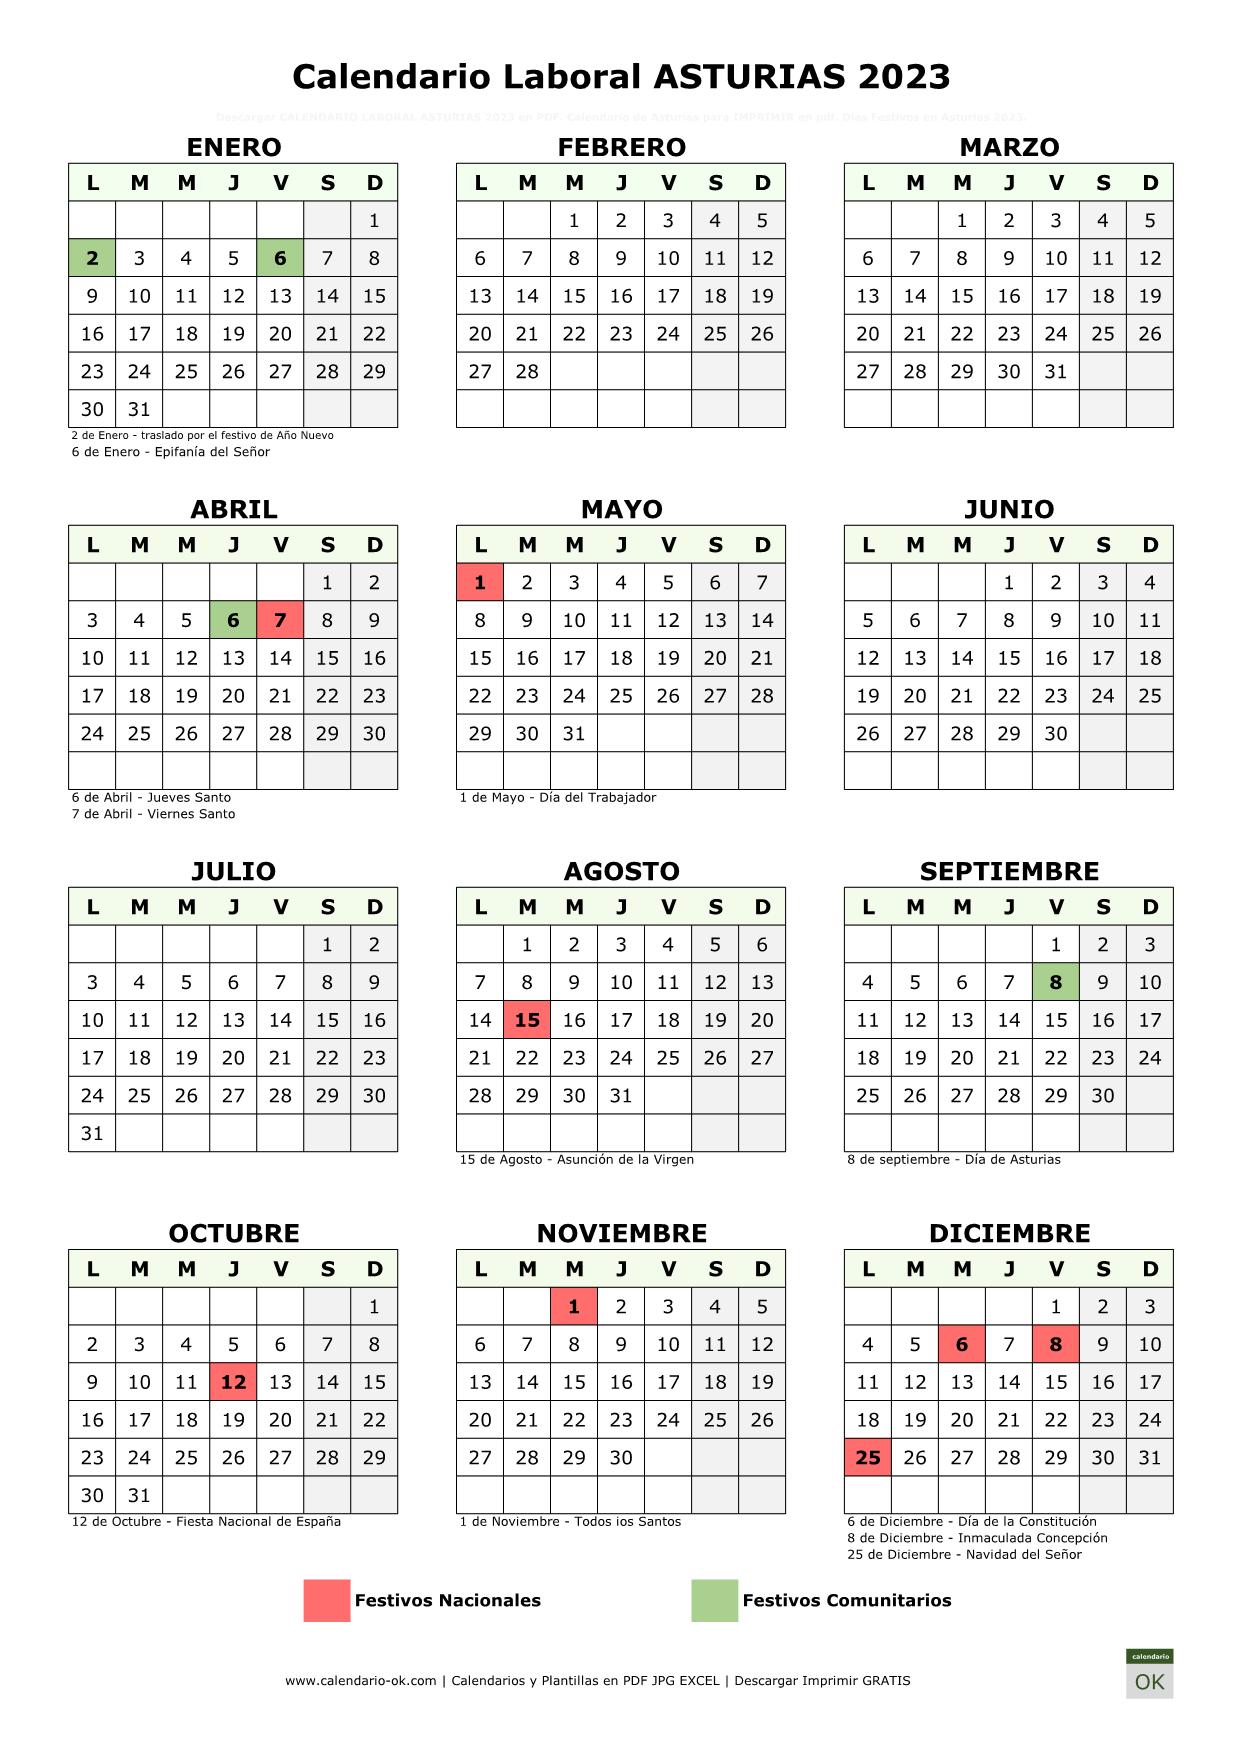 Calendario Laboral Principado de Asturias 2023